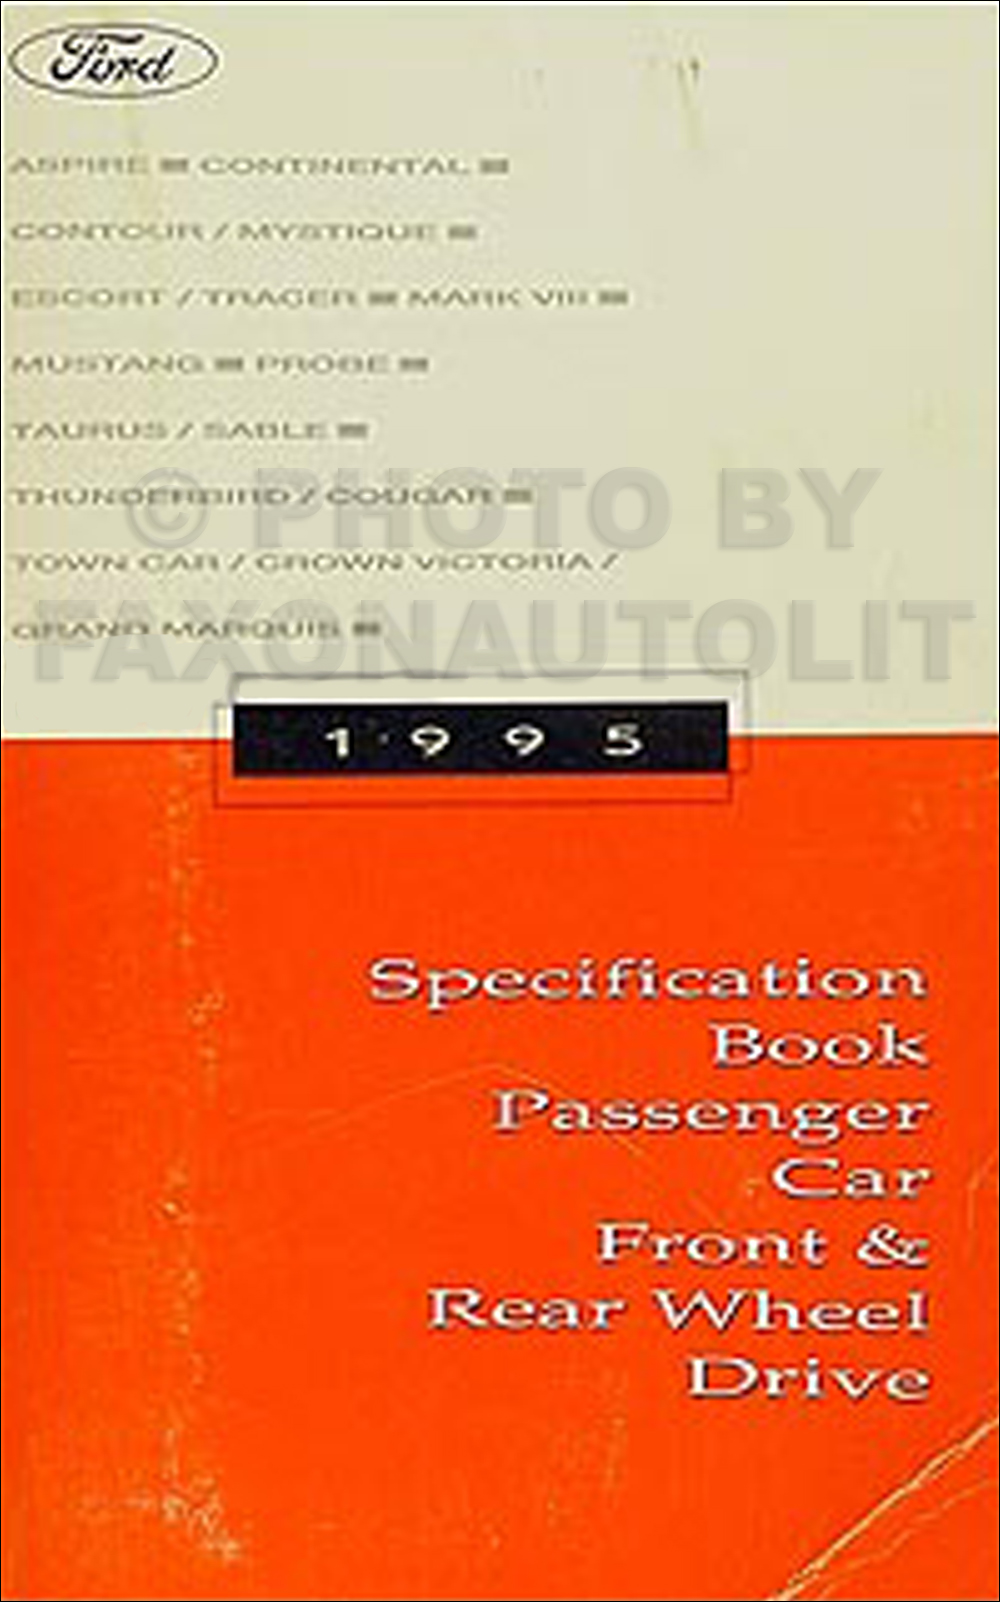 1995 Ford Lincoln Mercury Service Specifications Book Original